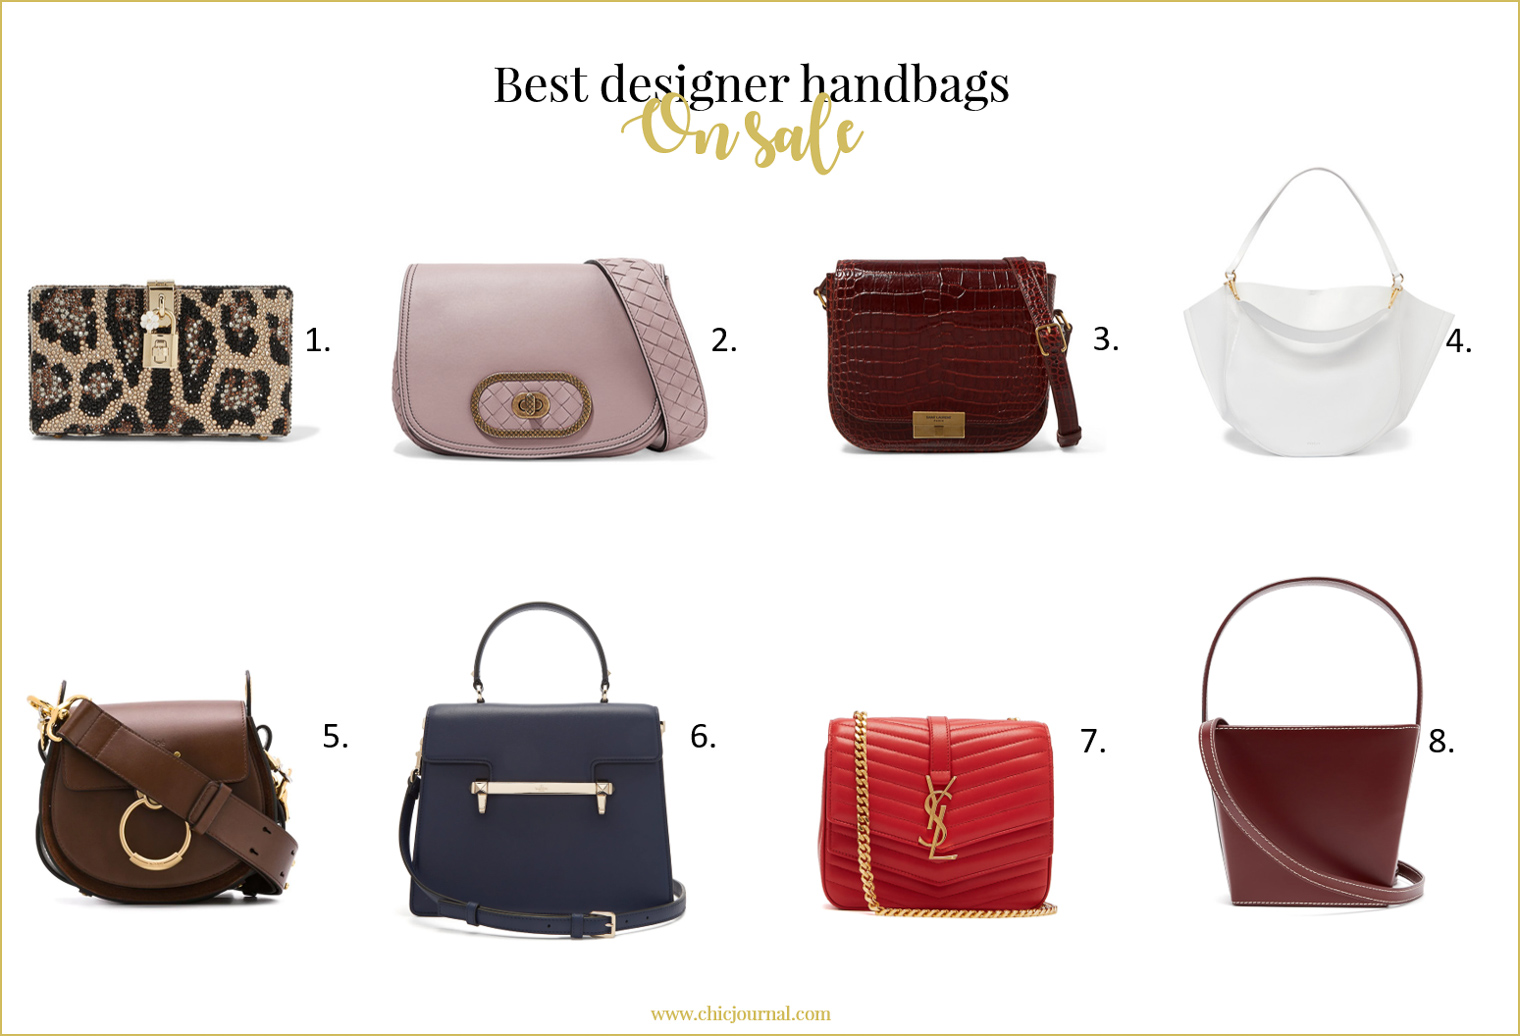 Best designer handbags in summer sales